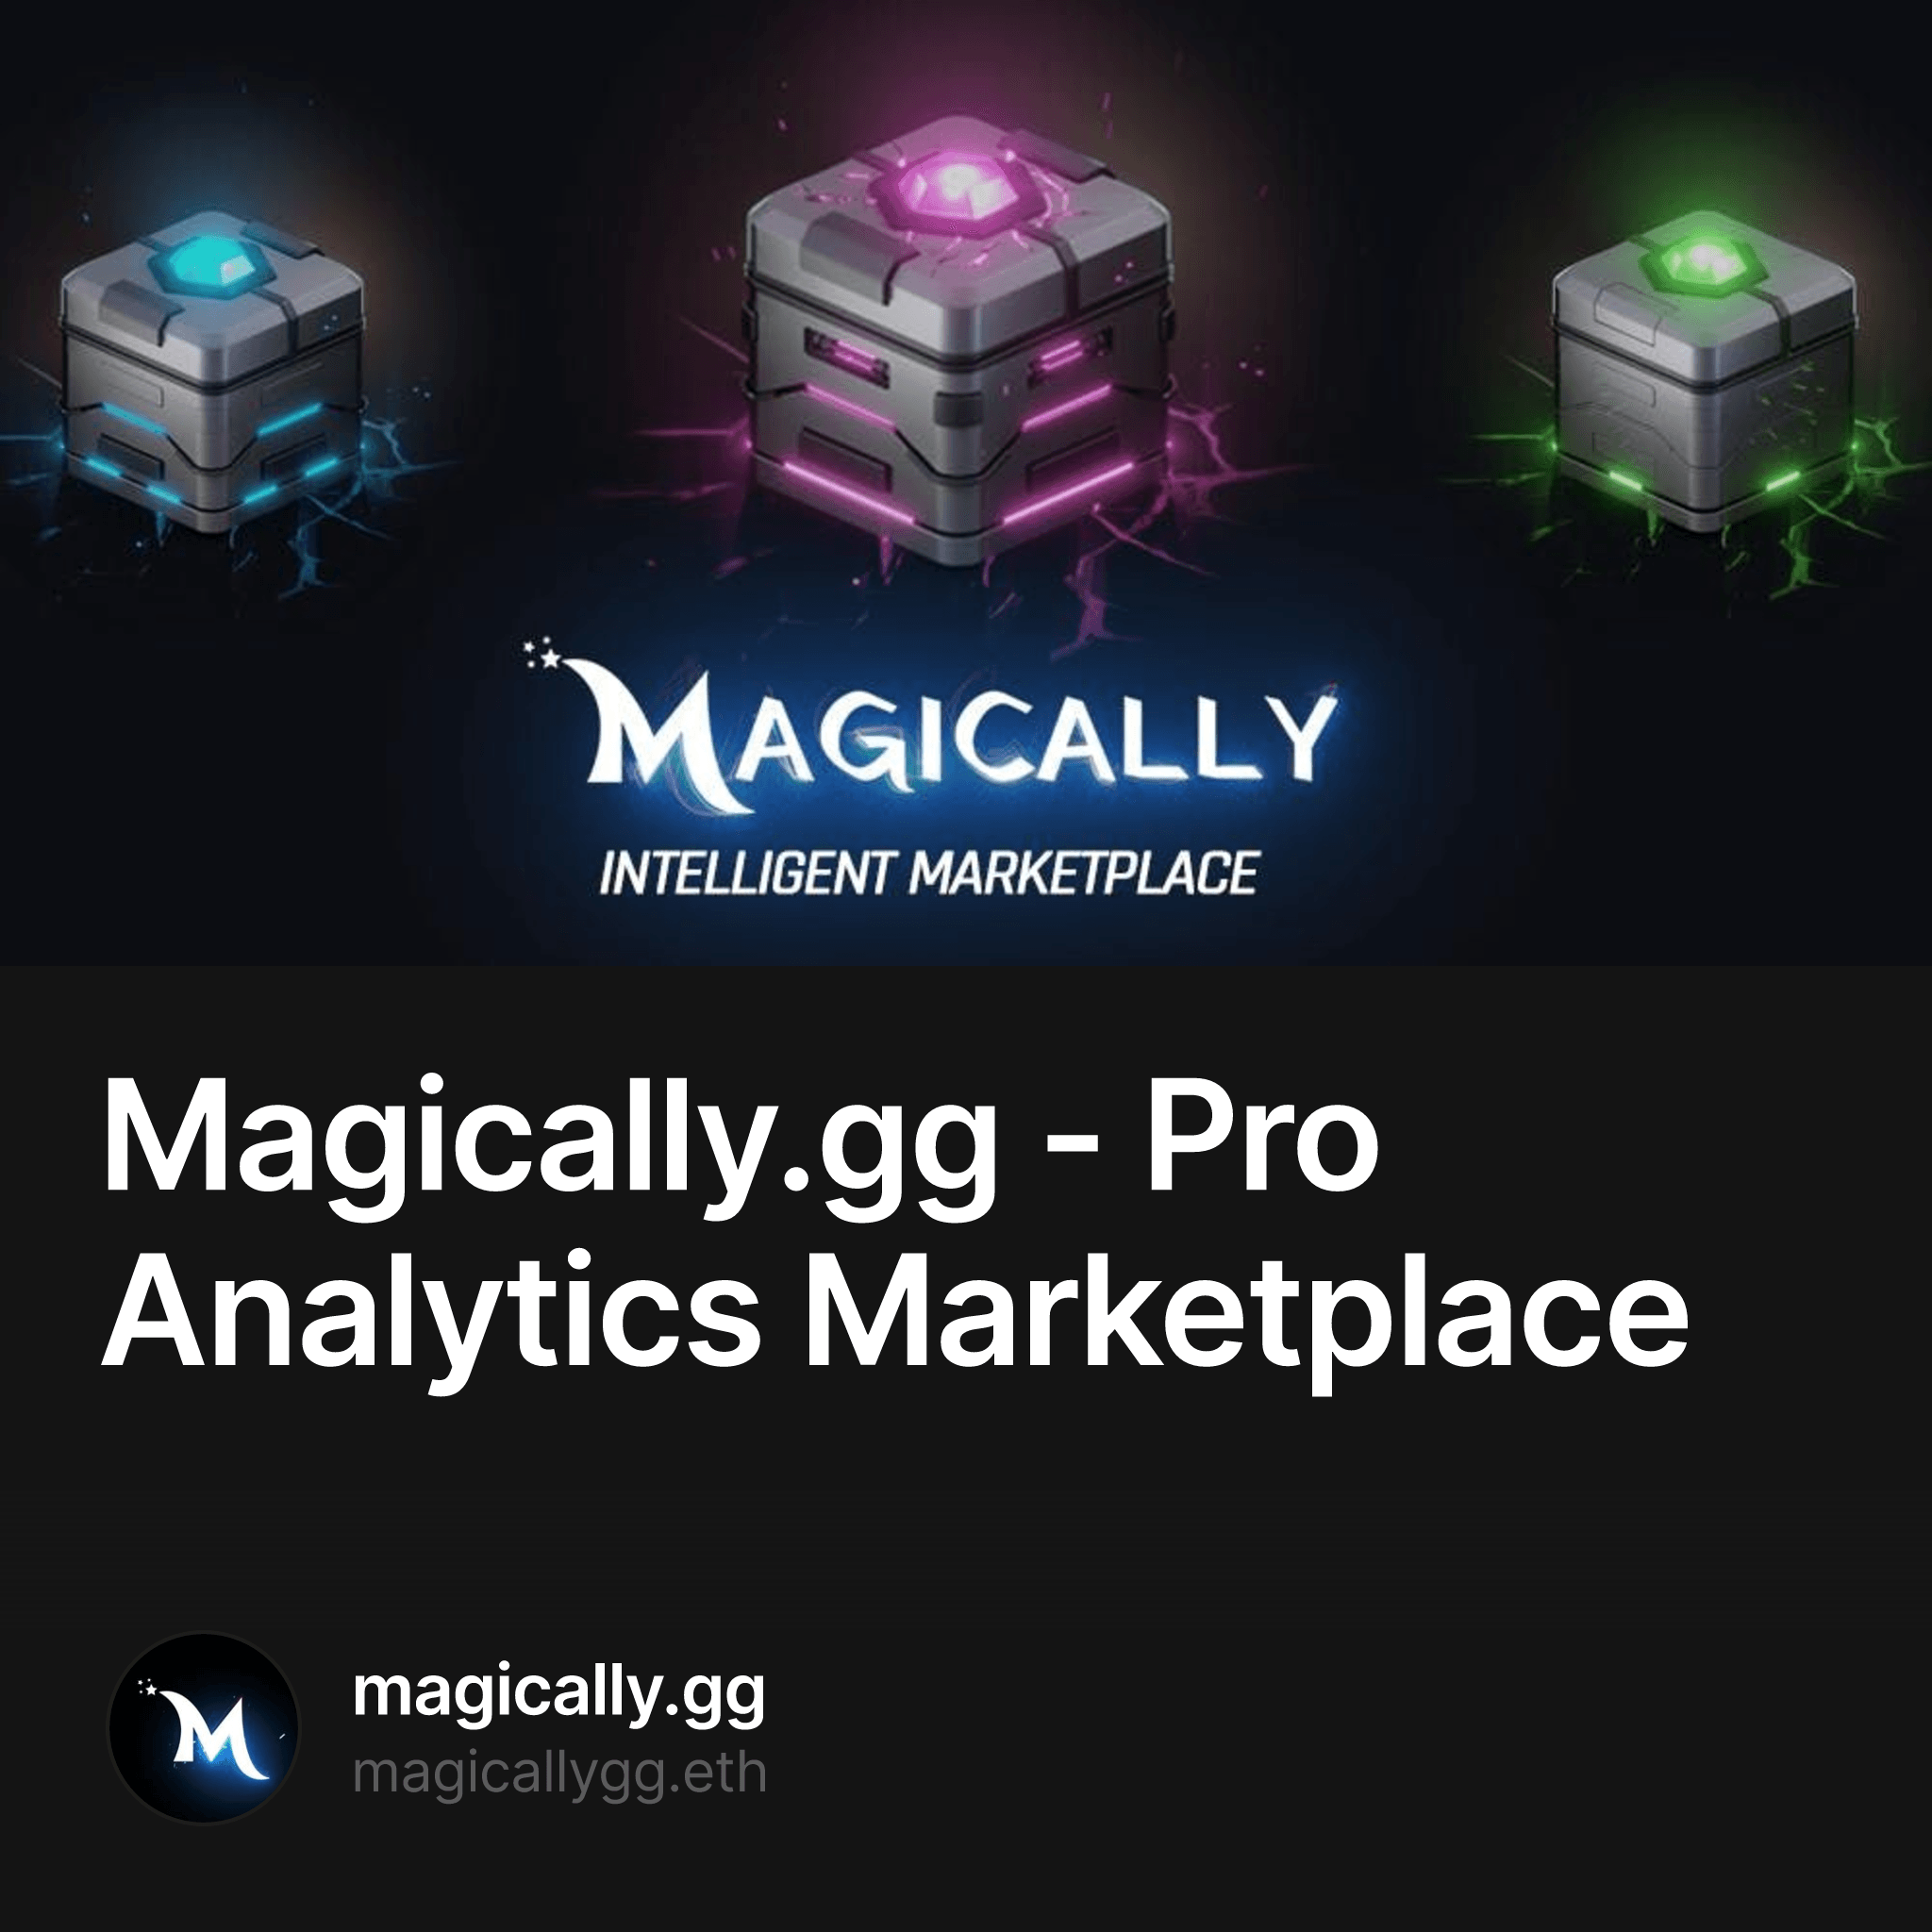 Magically.gg - Pro Analytics Marketplace 814/1000